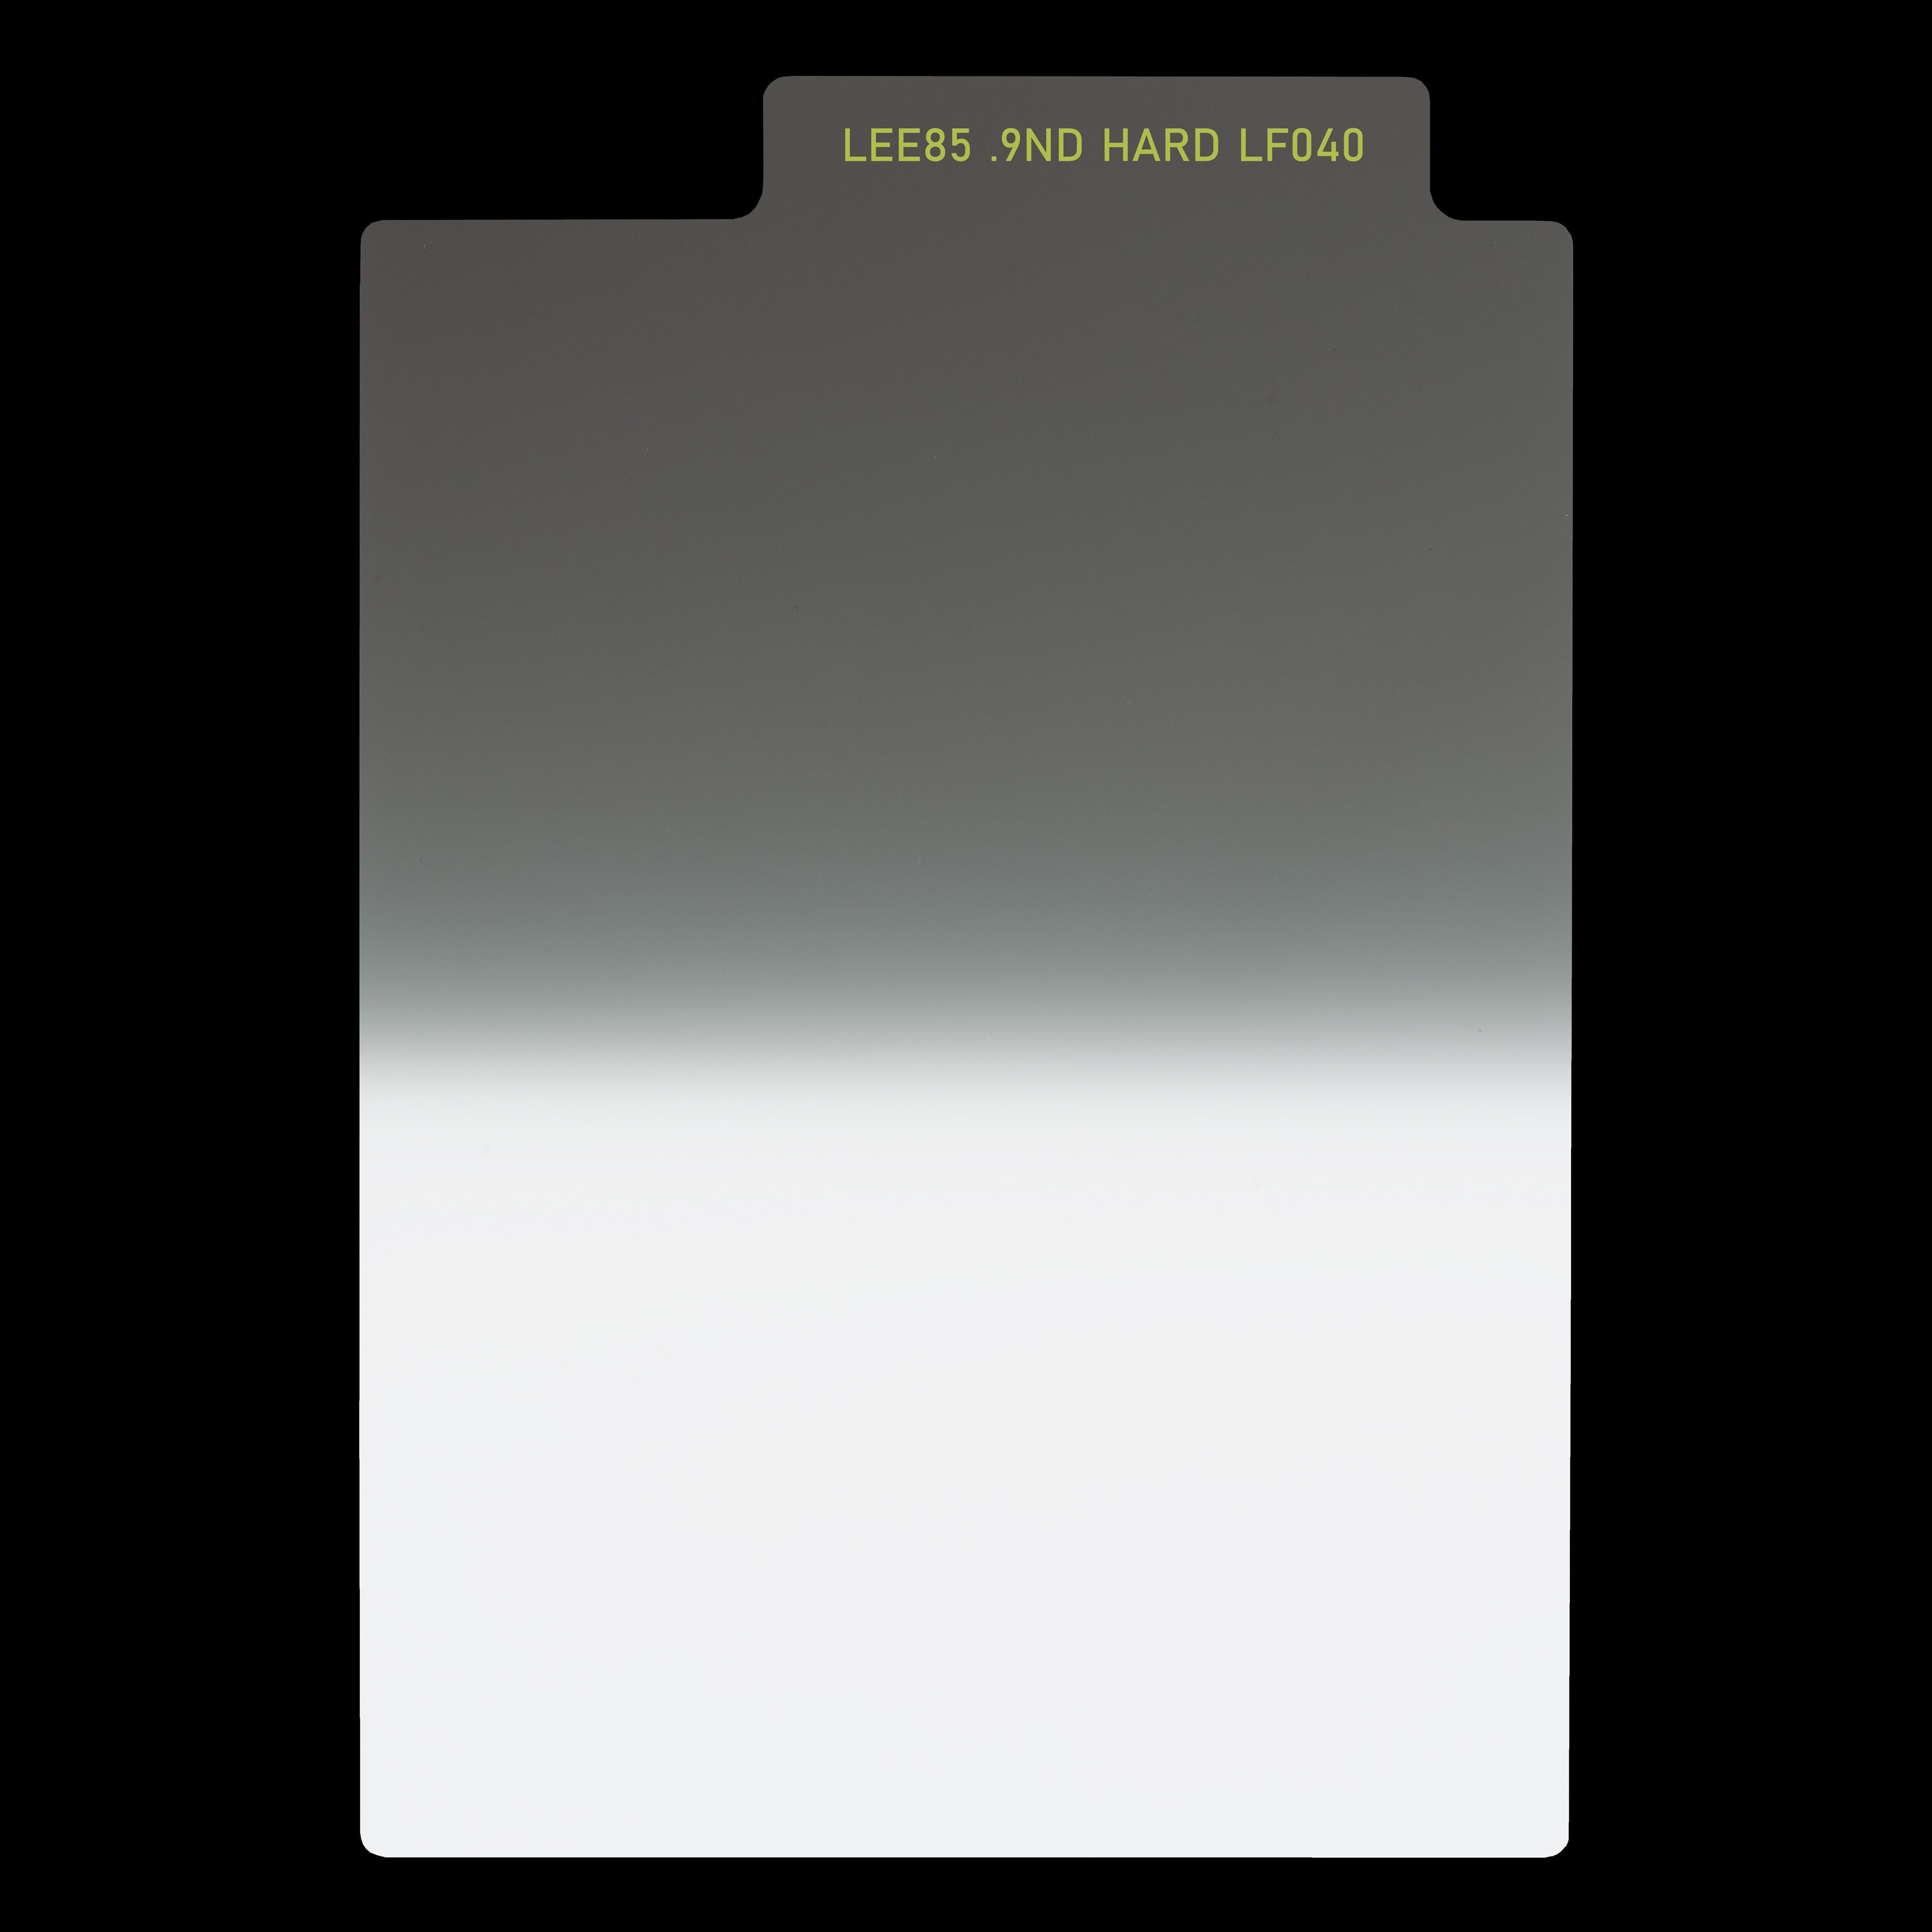 LEE85 Kit de desarrollo Lee Filters